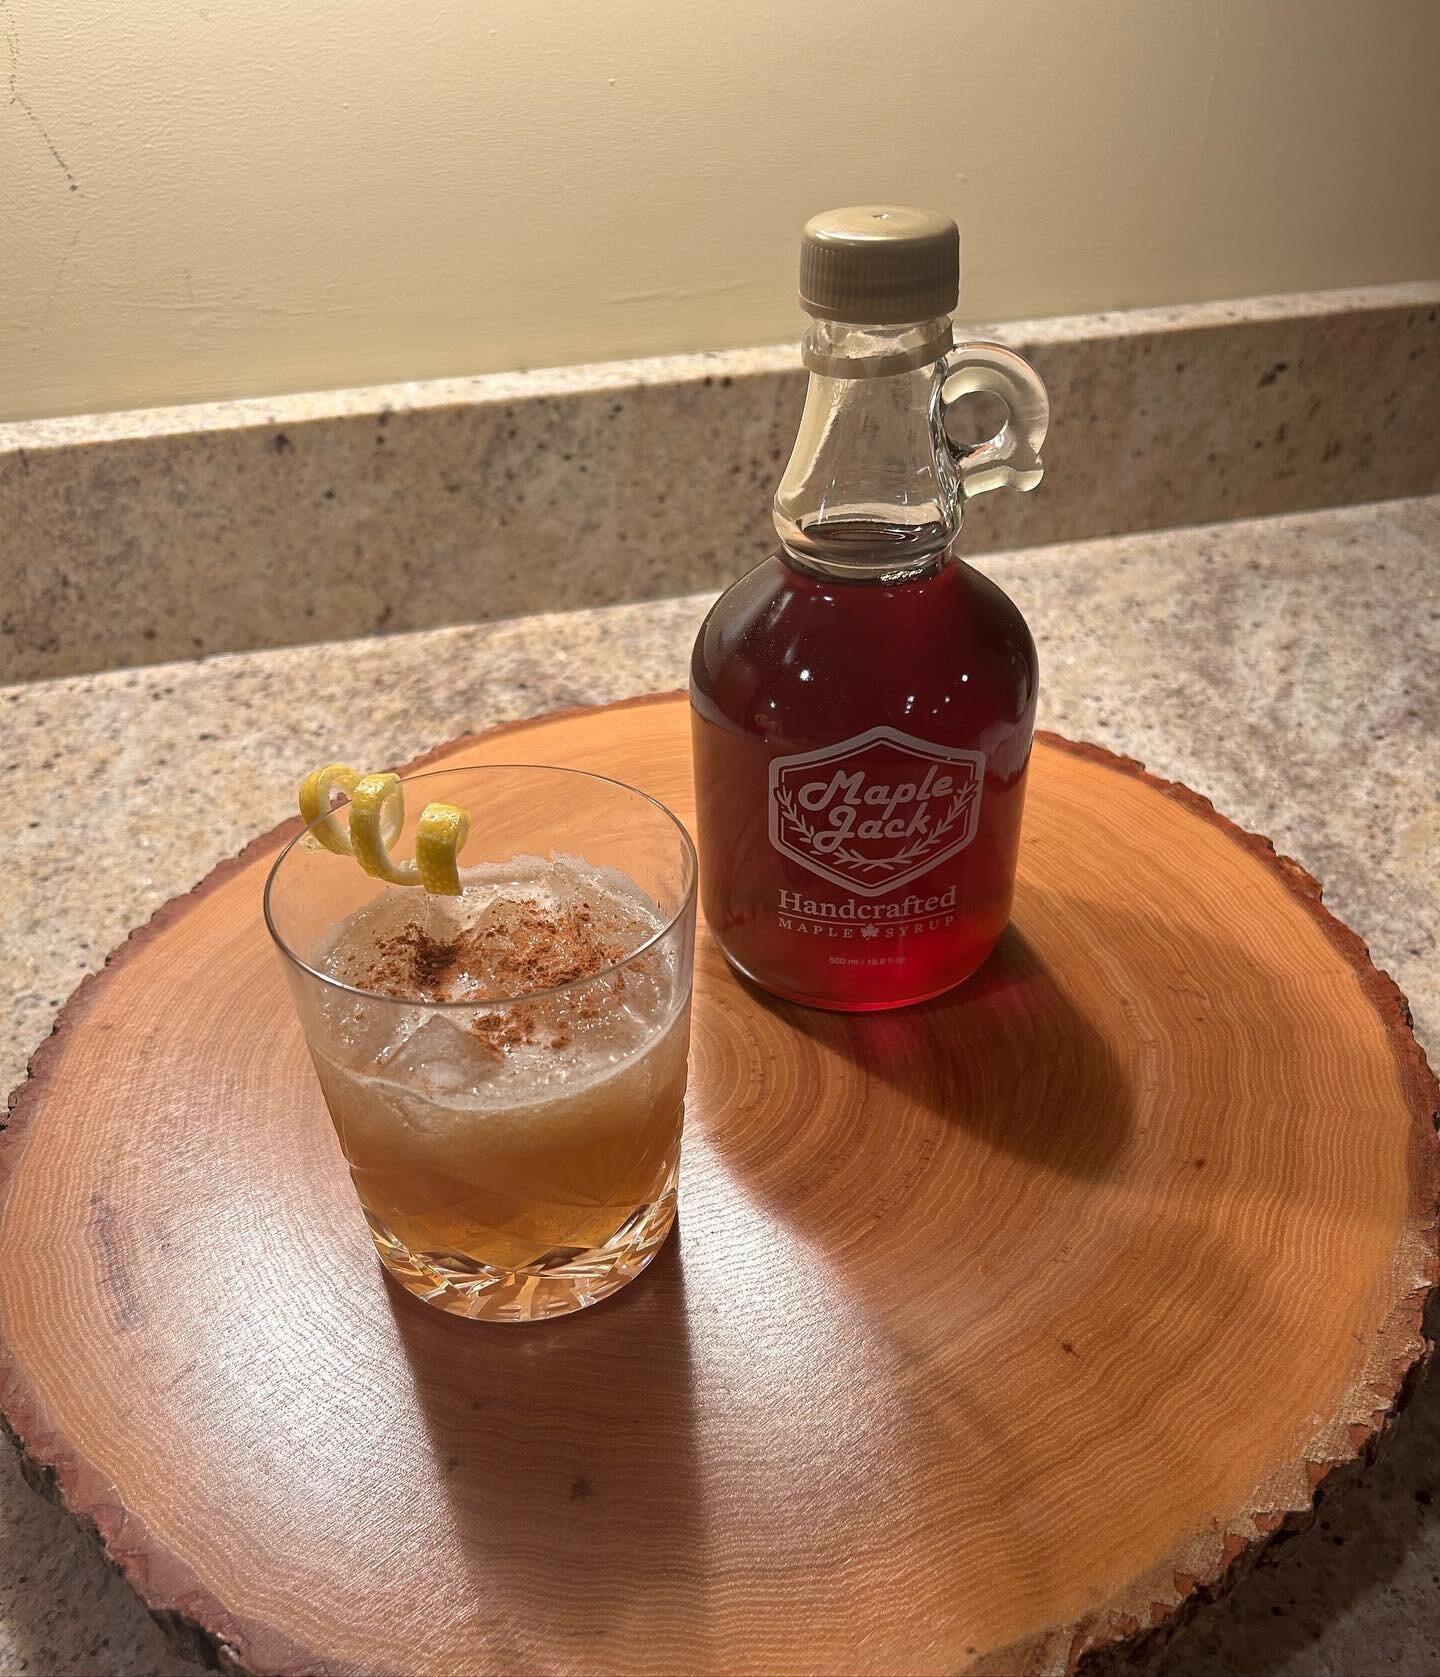 🍁 Maple Jack Whiskey Sour Recipe 🥃

1.5oz whiskey, 1oz lemon juice, 3tsp maple syrup, pinch of cinnamon. Shake, pour, and enjoy!